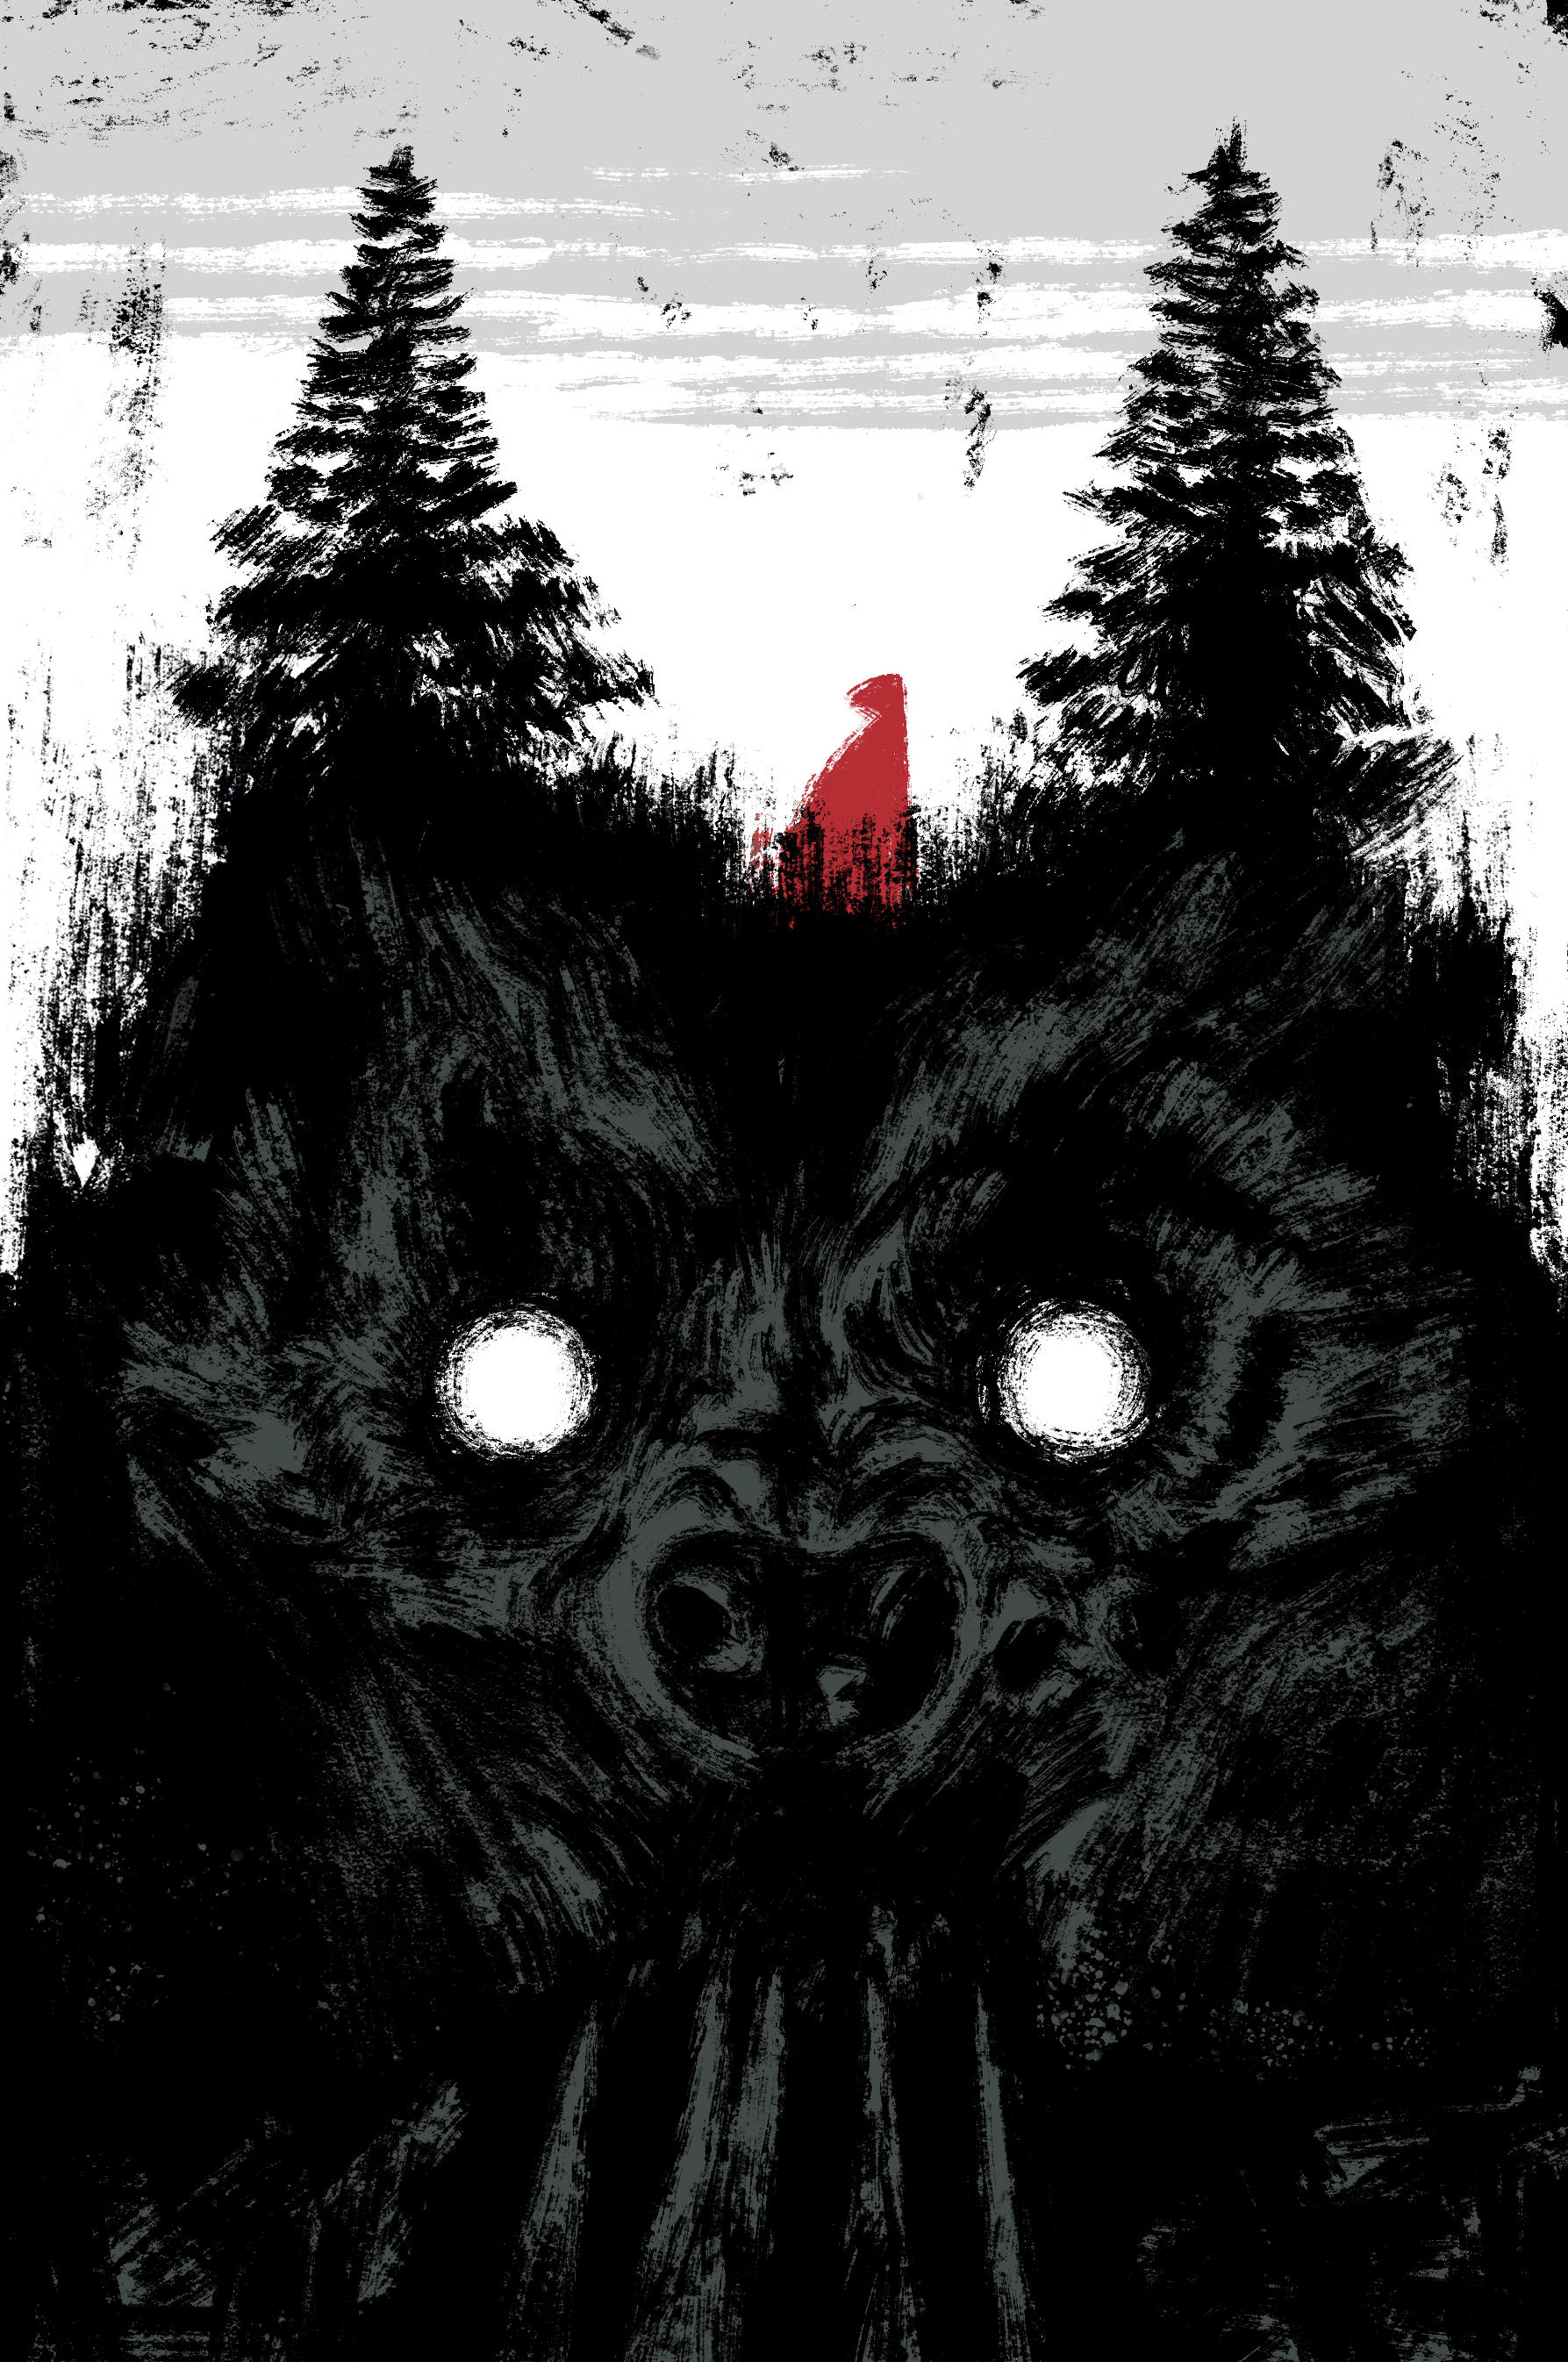 the big bad wolf